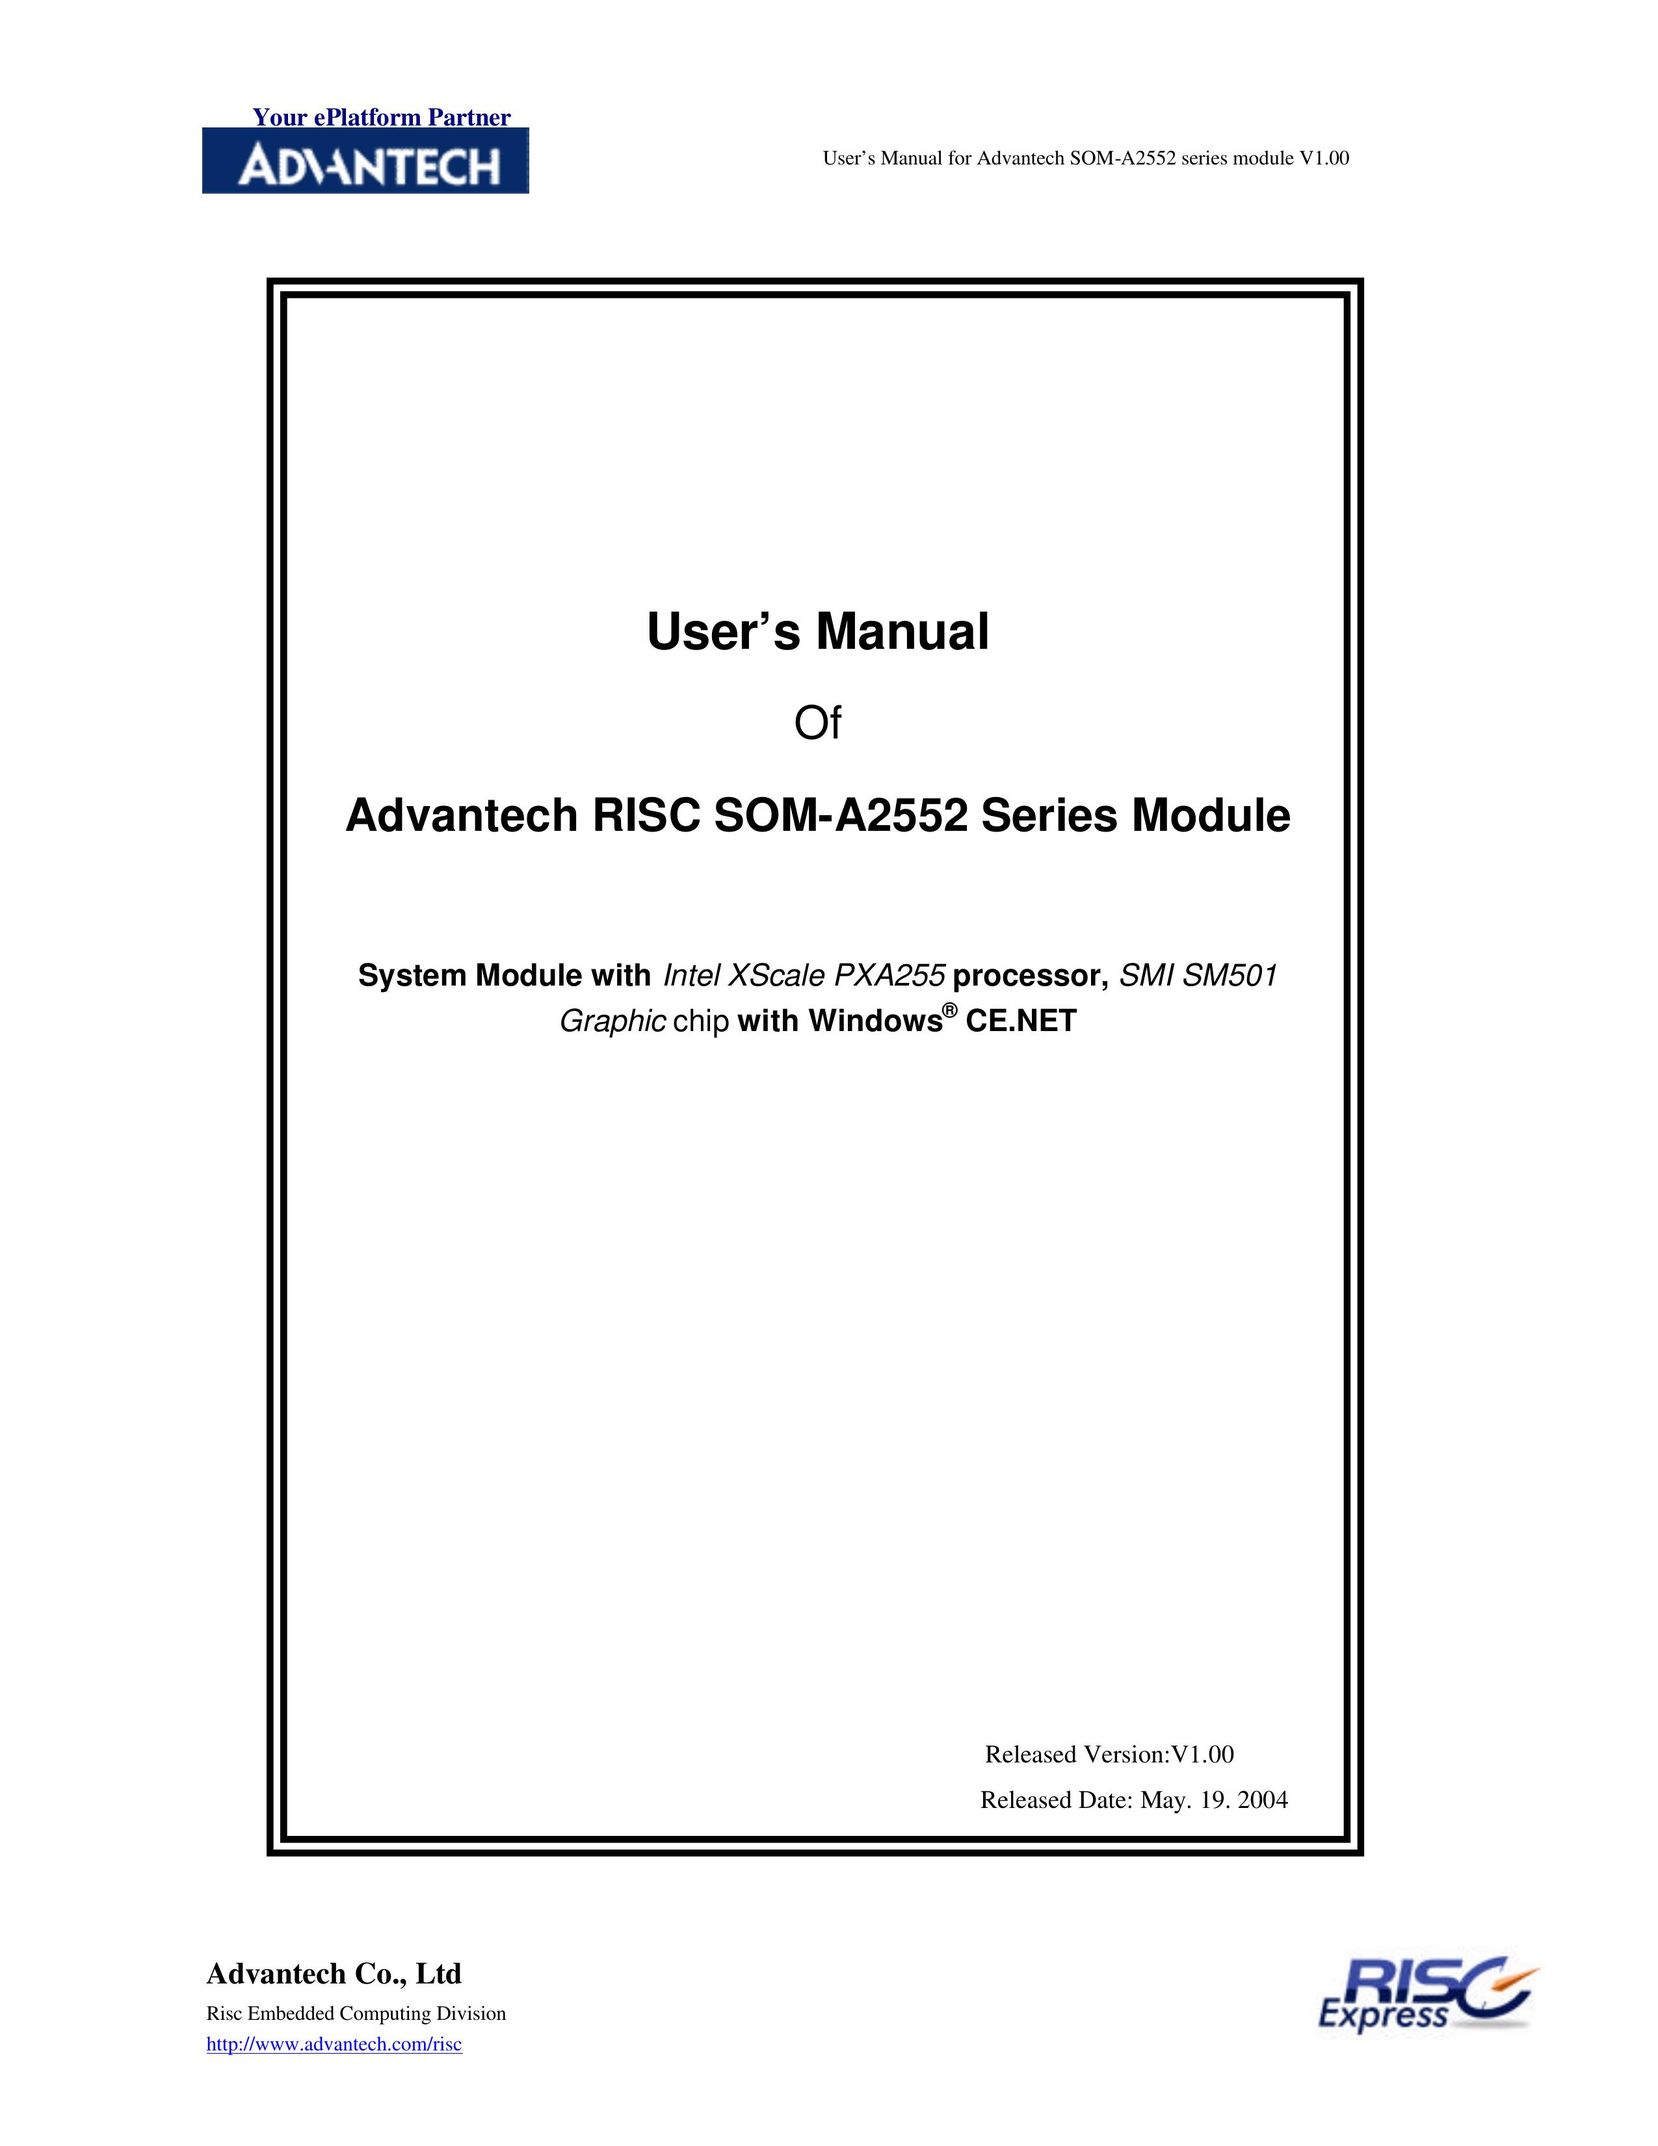 Advantech SOM-A2552 Network Router User Manual